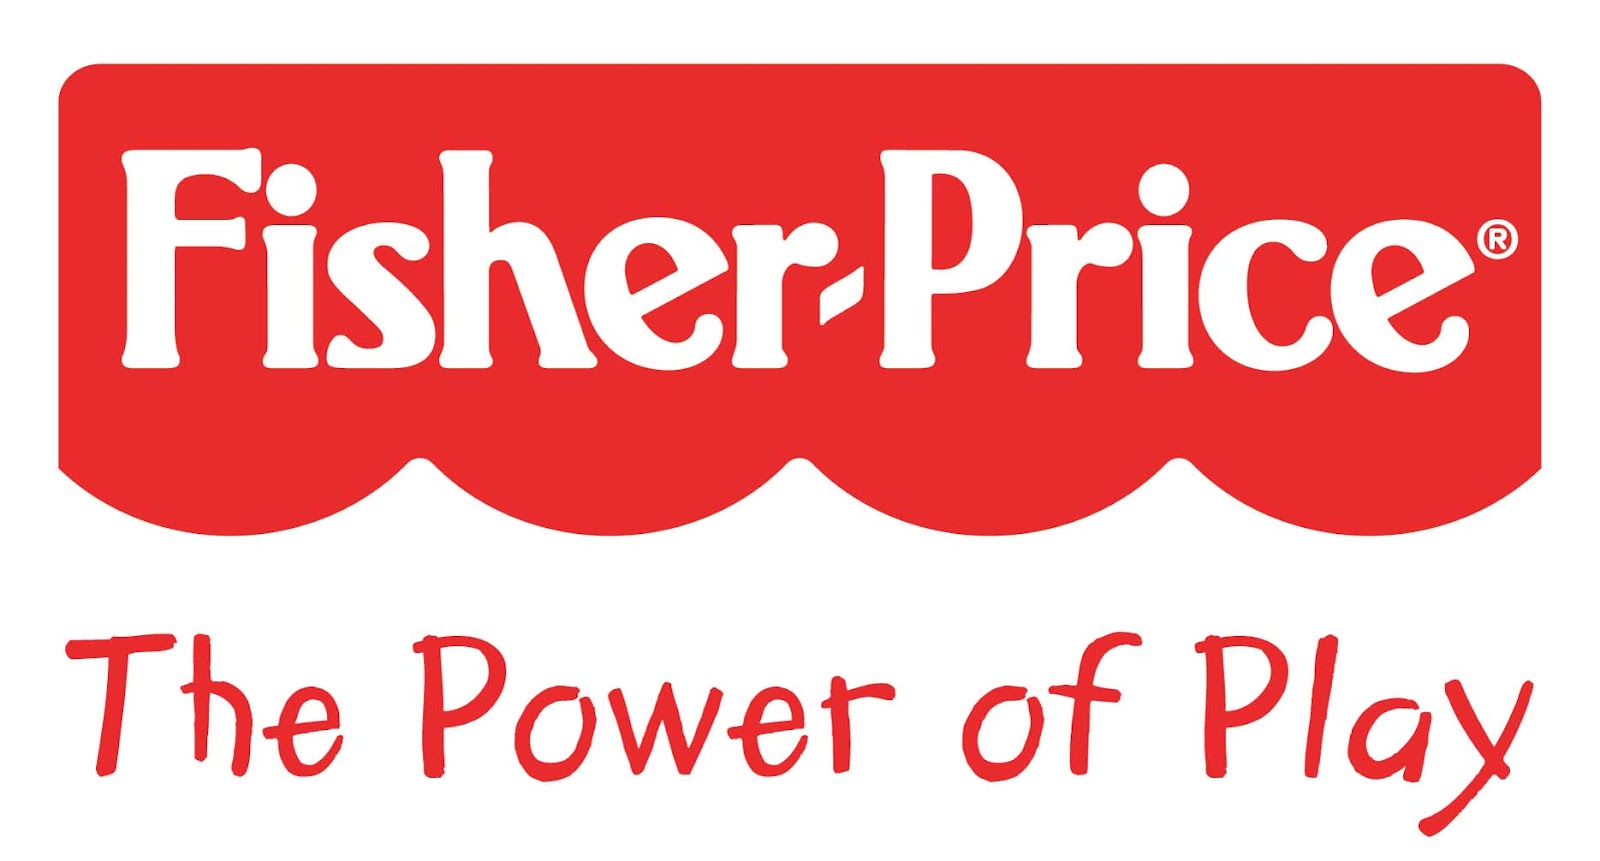 richprime Fisher Price